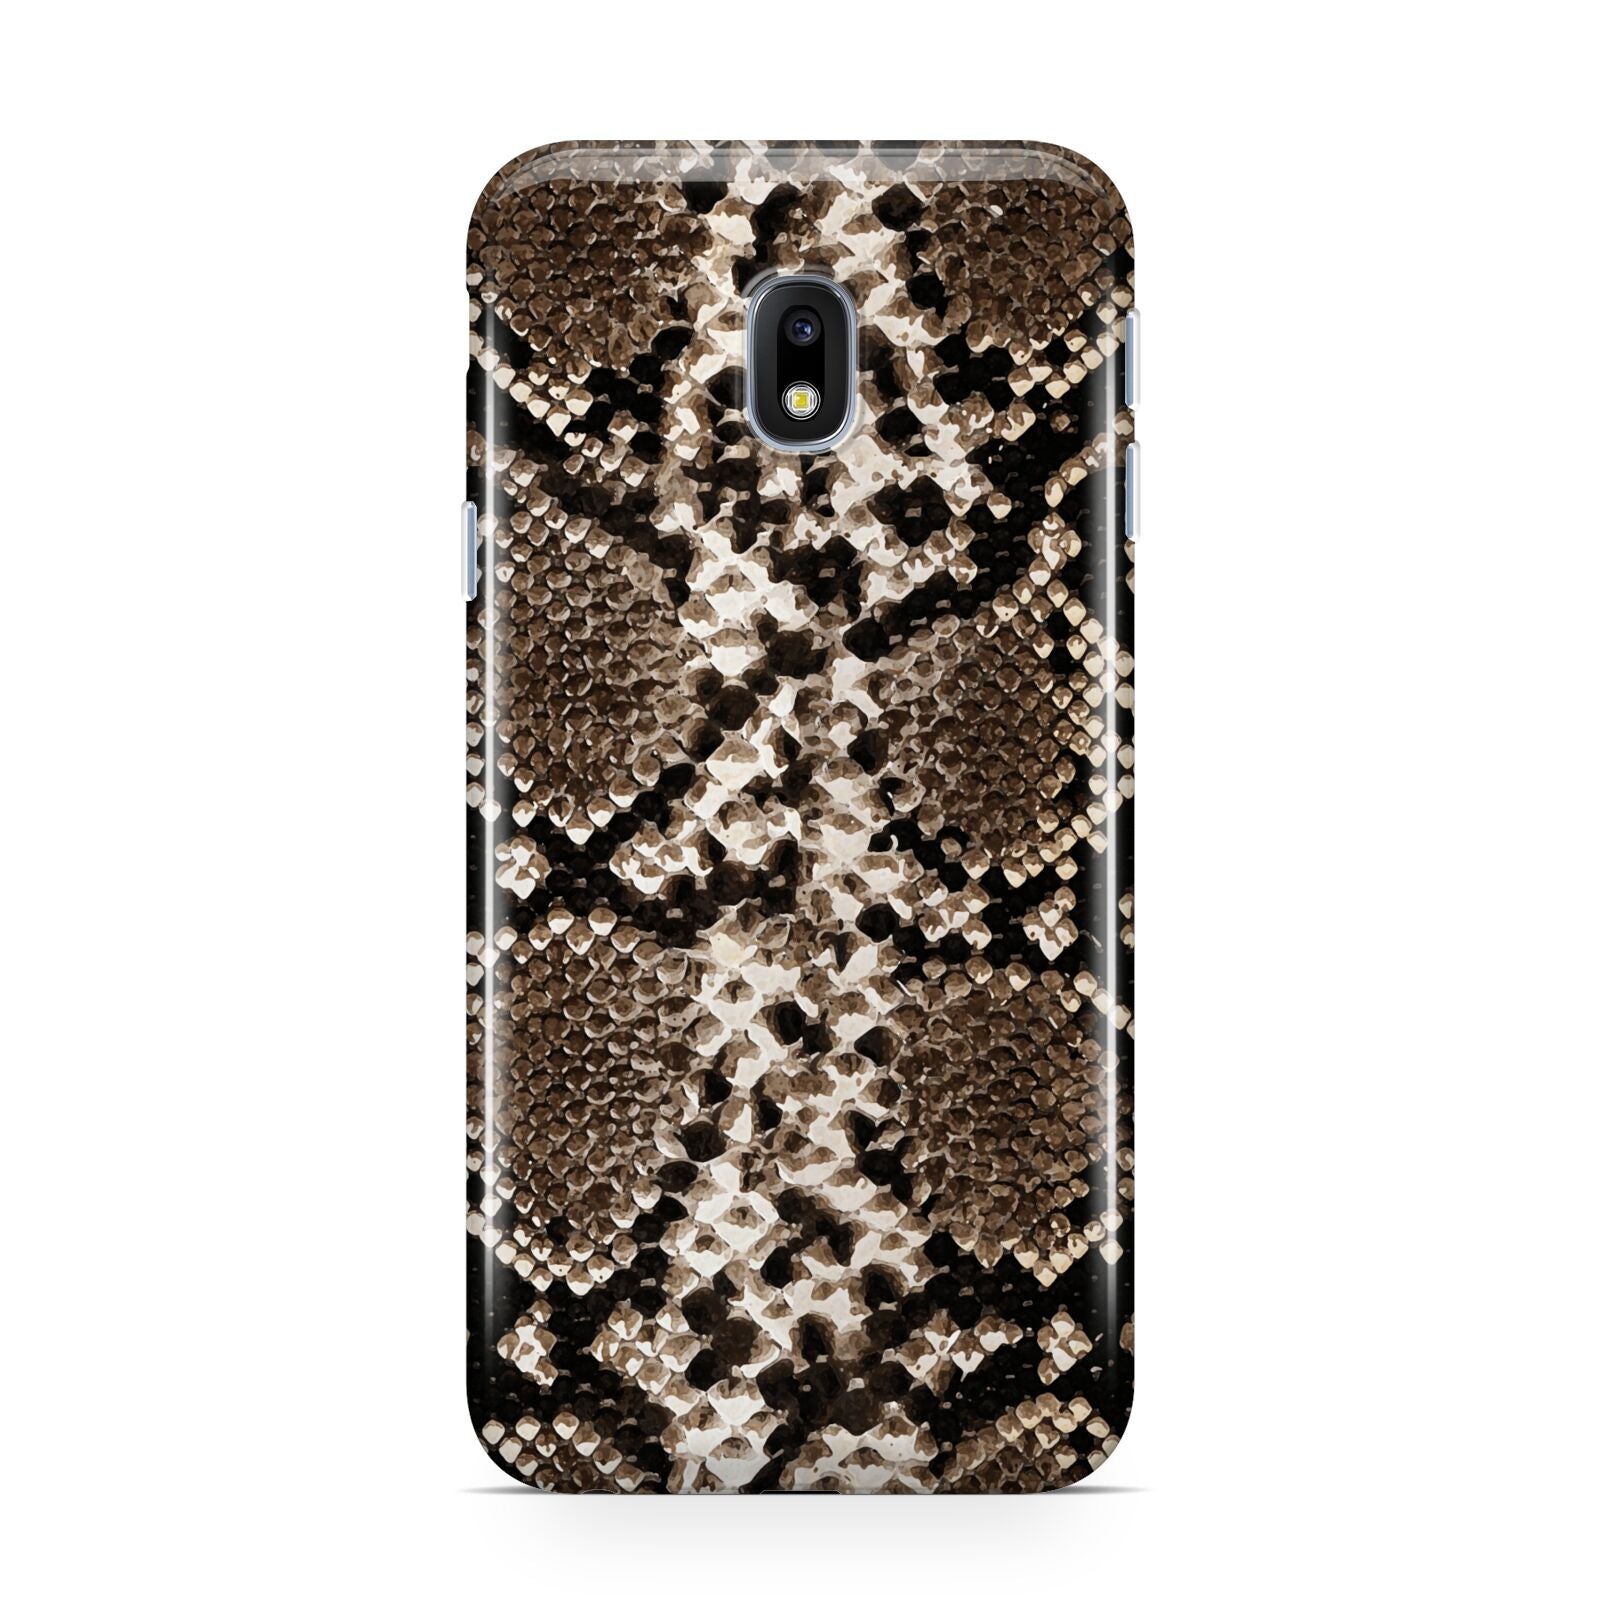 Snakeskin Pattern Samsung Galaxy J3 2017 Case